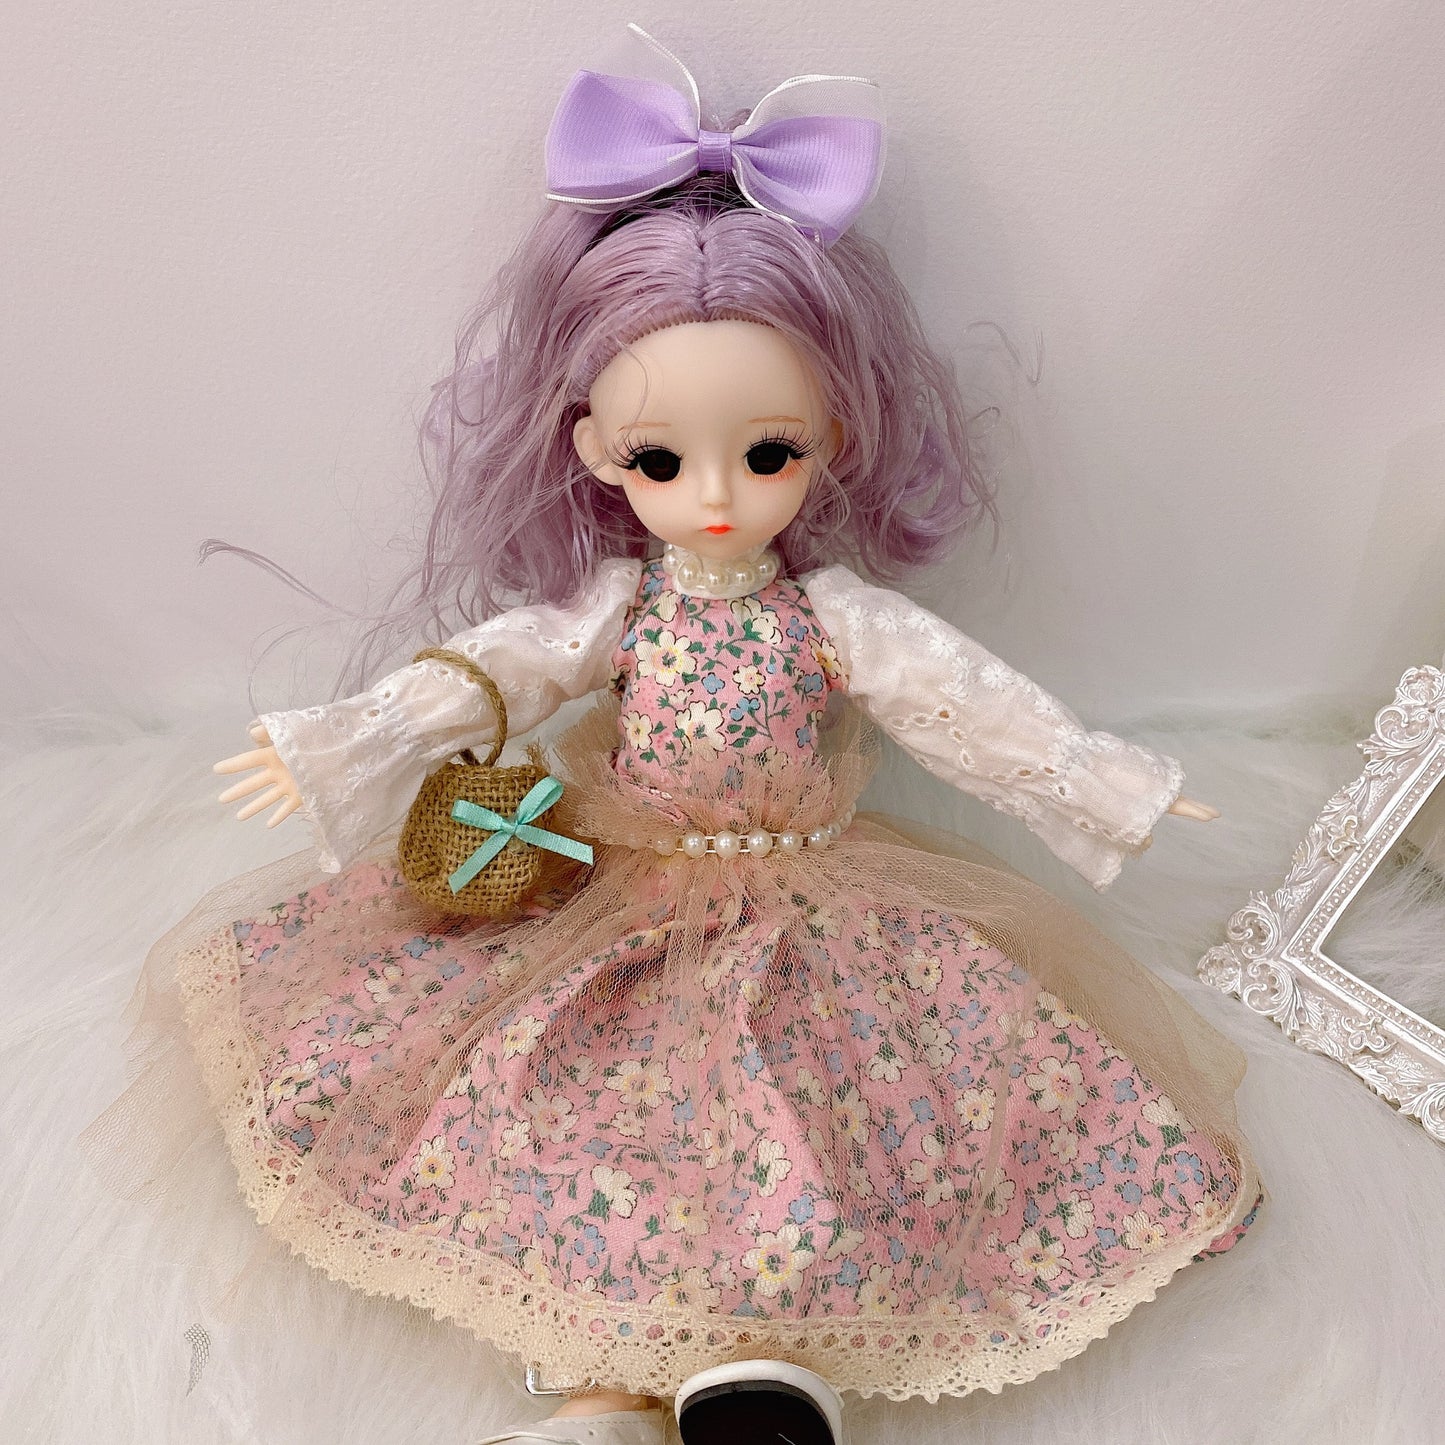 Lolita Young Princess Lolita Toy Doll Gift